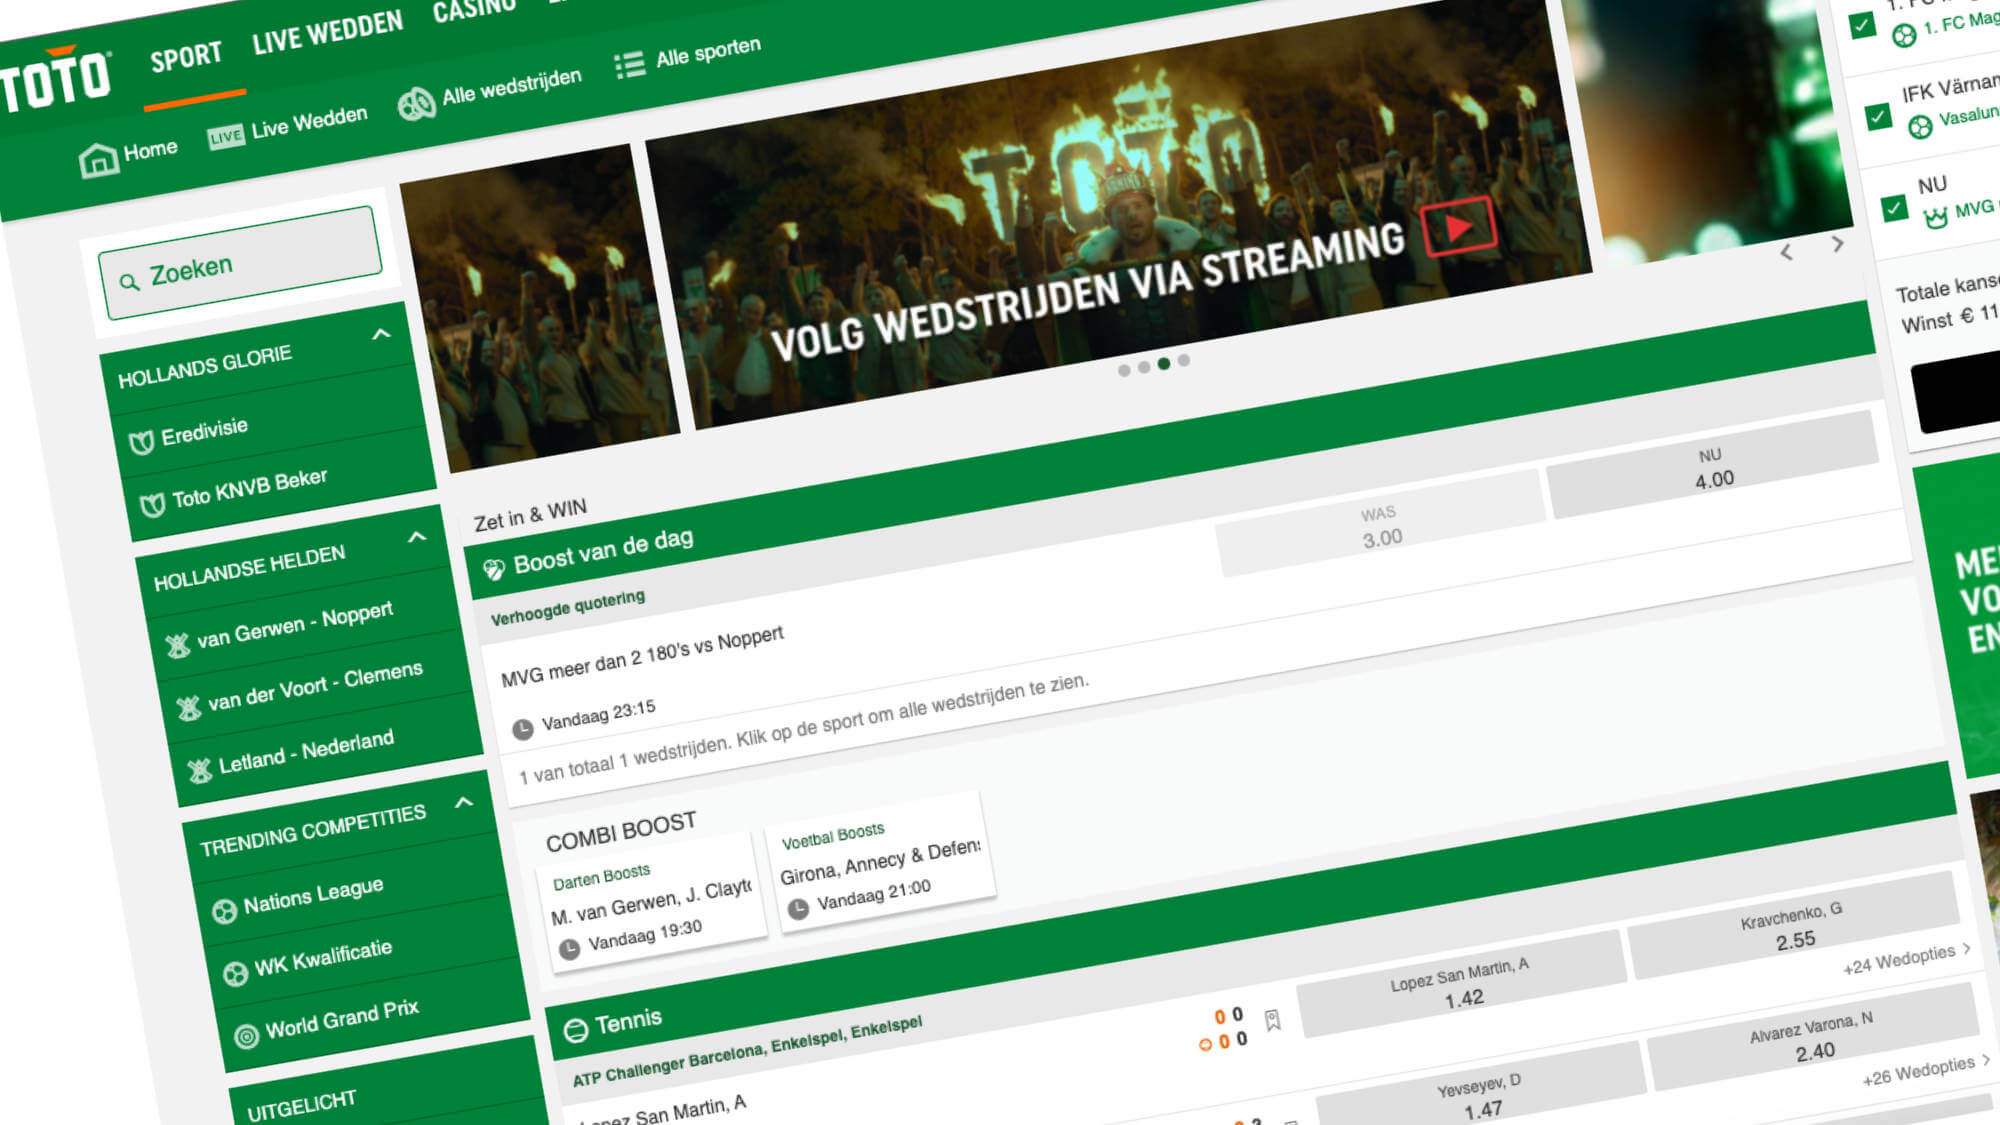 Toto Sport en Casino website